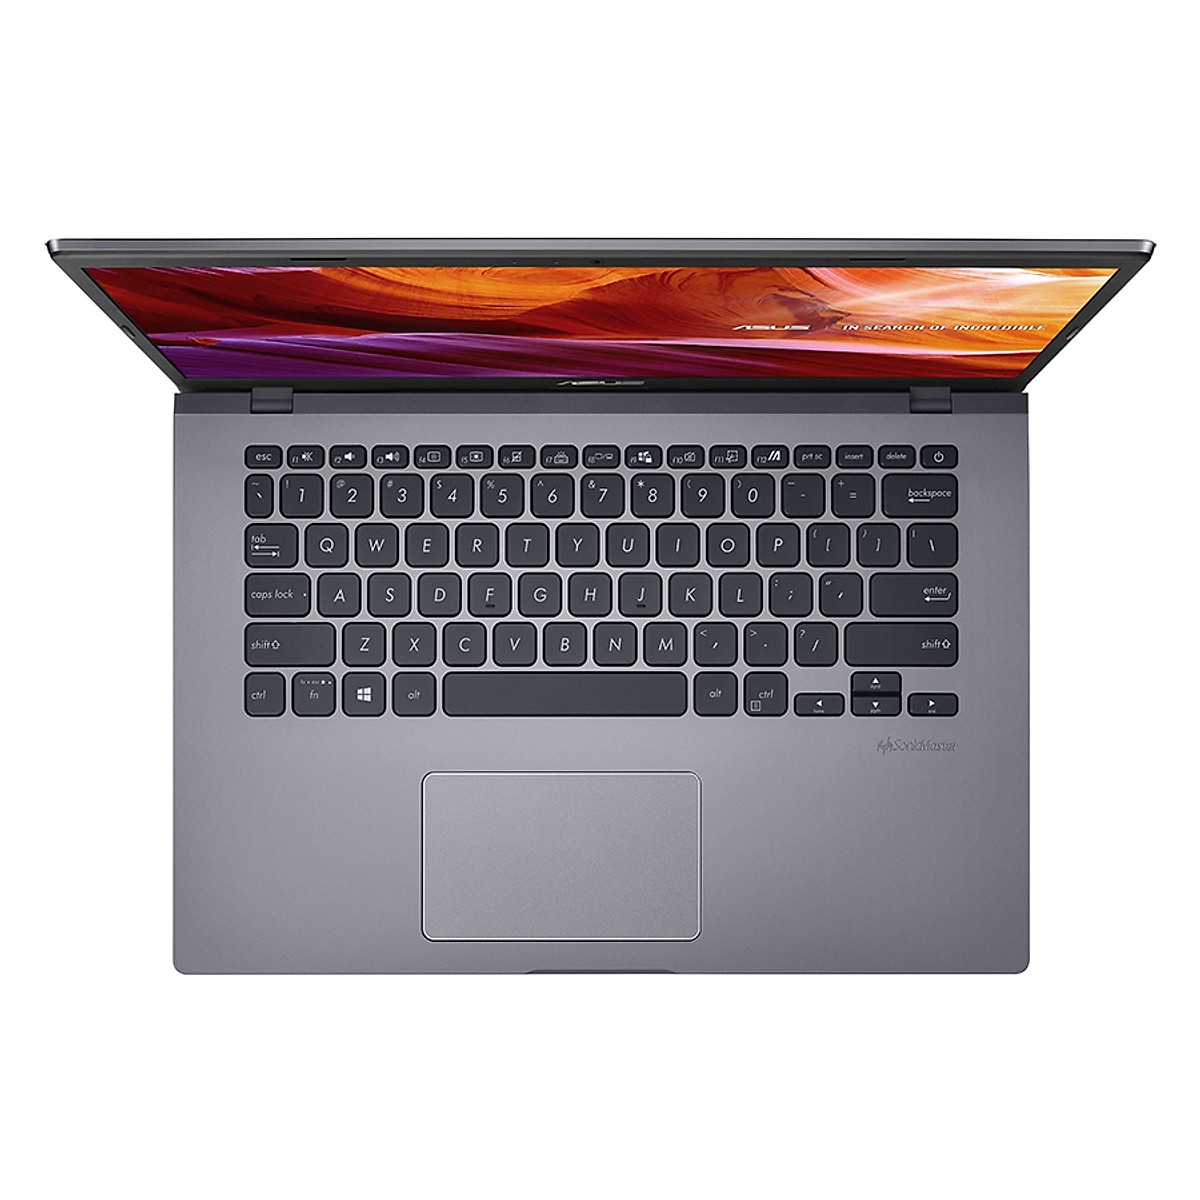 Laptop Asus X409UA-EK093T